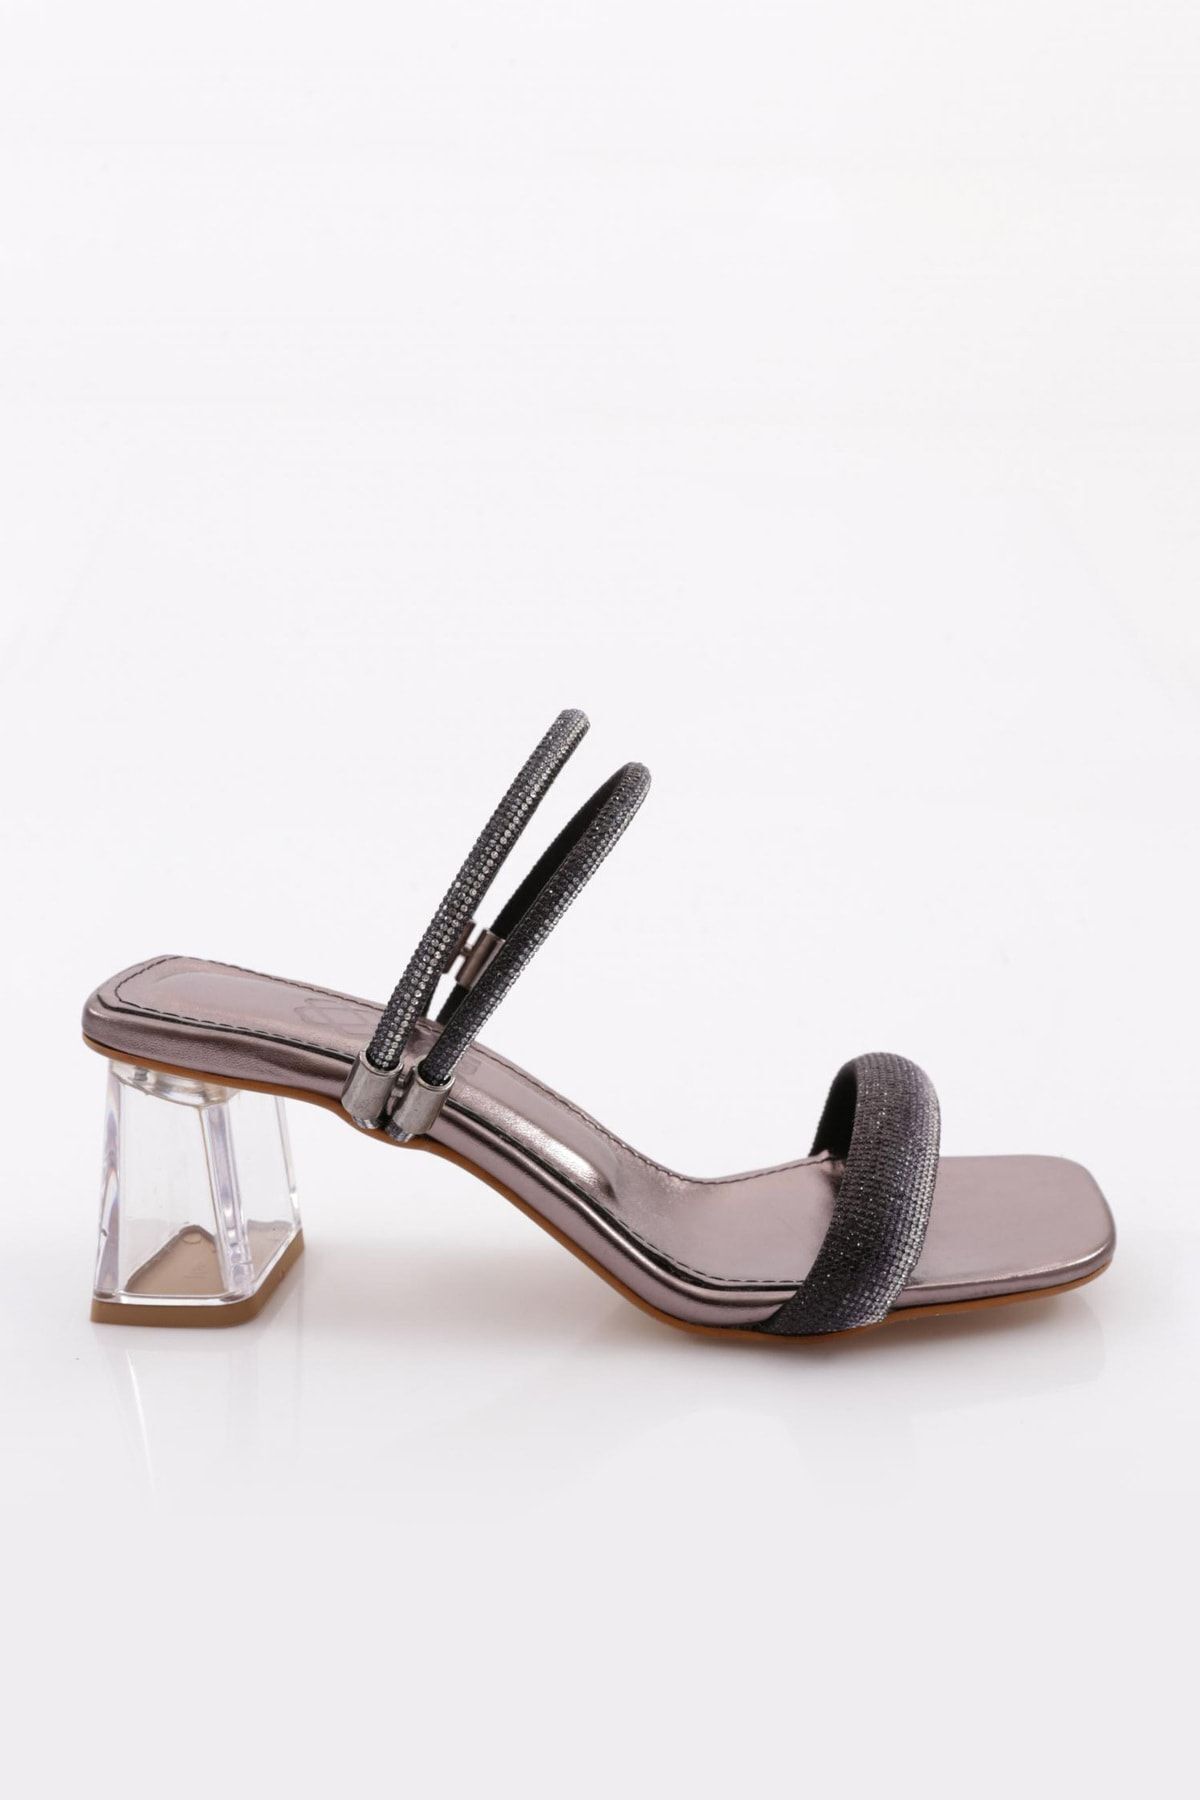 Dgn 901 Kadın Kare Burun Şeffaf Topuklu Sandalet Platin Metalik